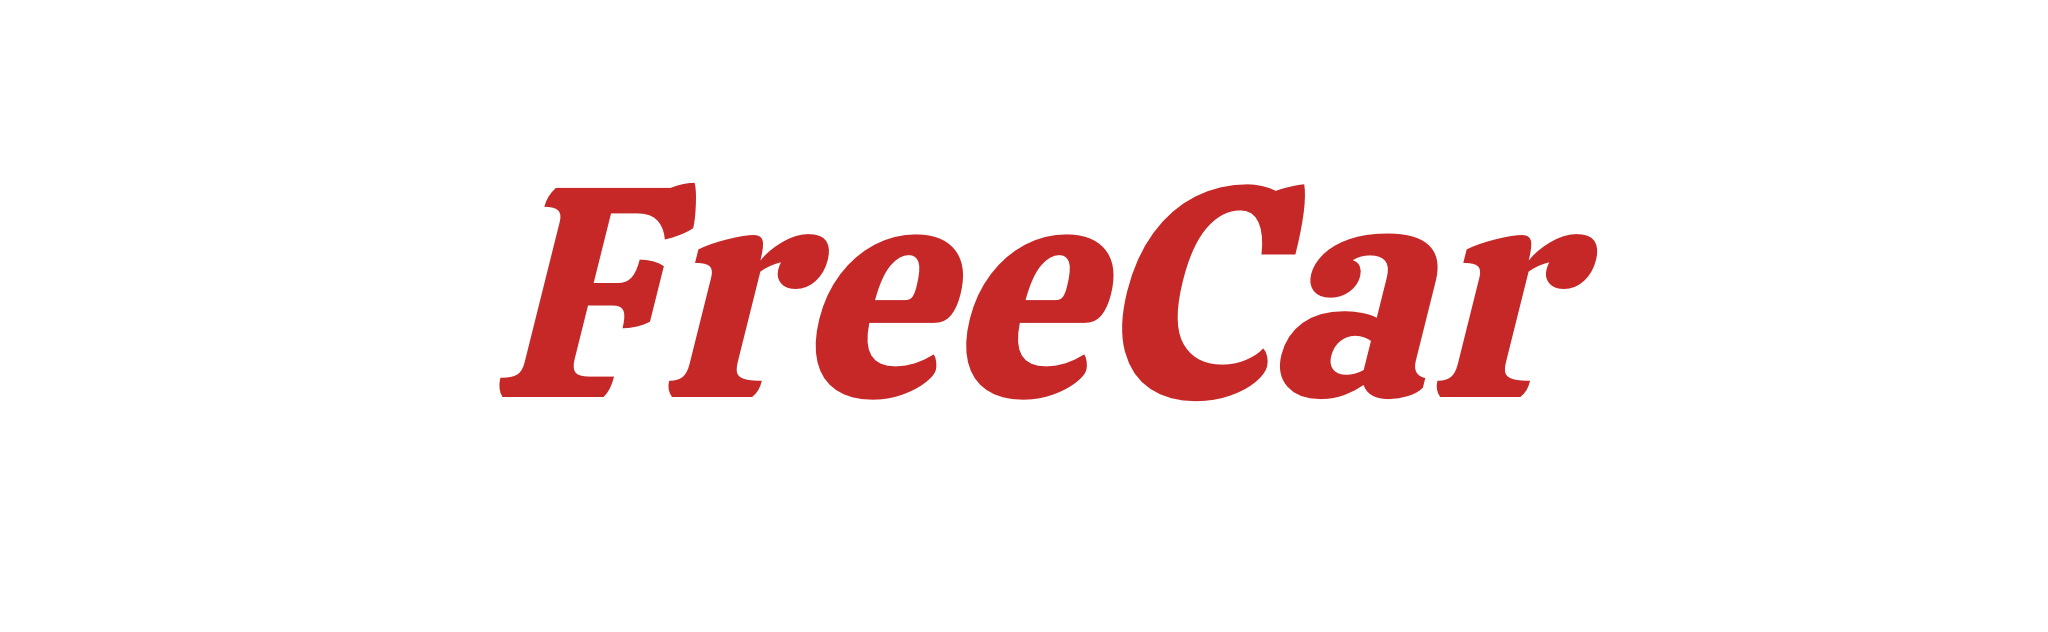 FreeCar